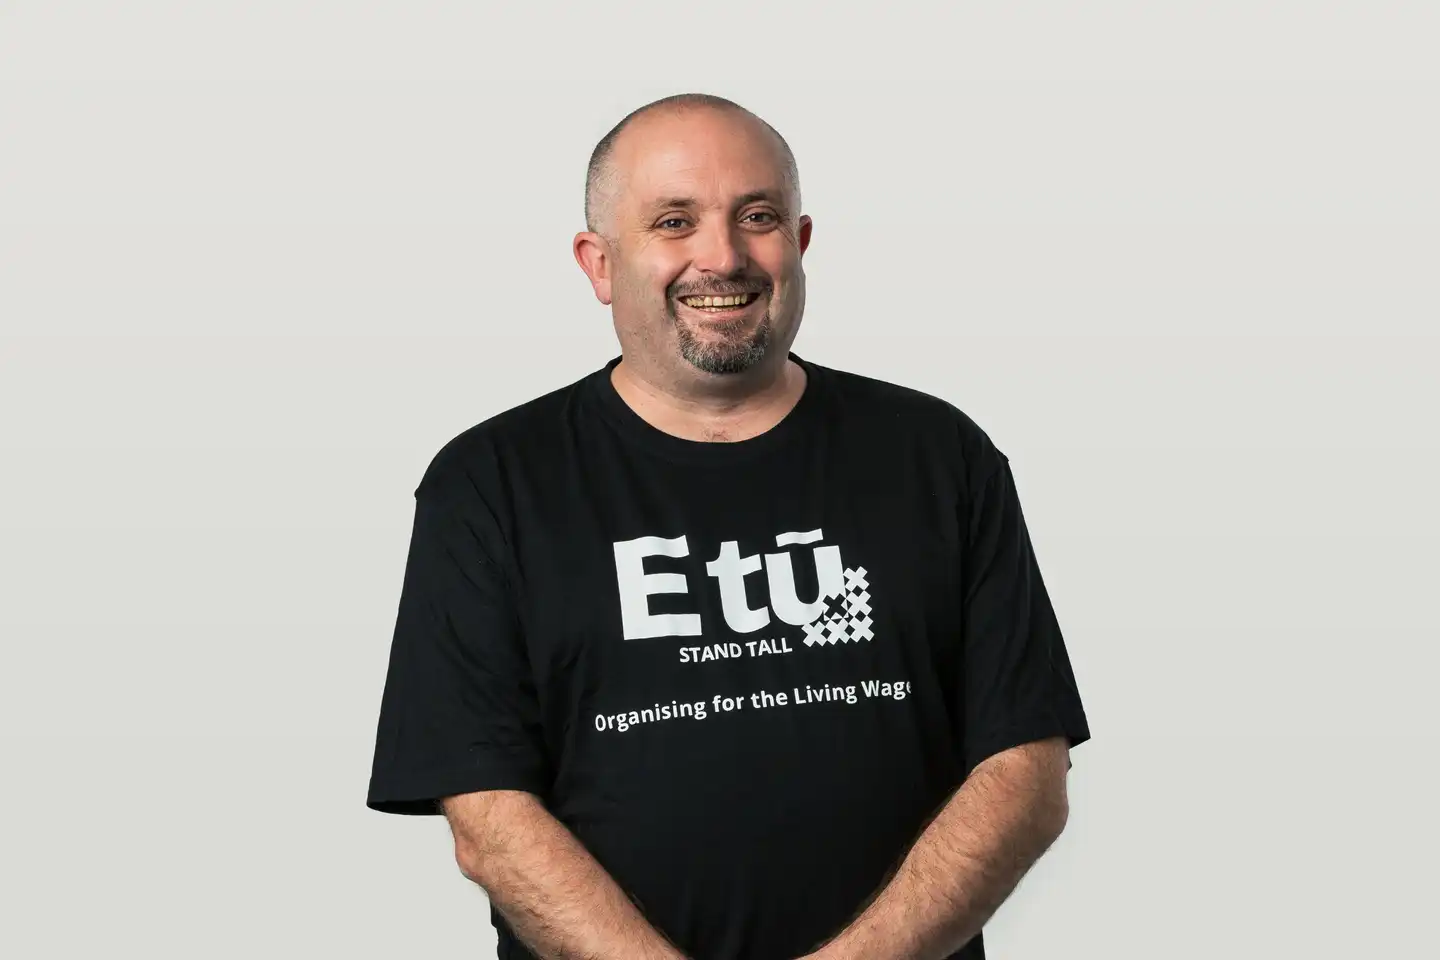 John in an 'E tū - Organising for the Living Wage' t-shirt